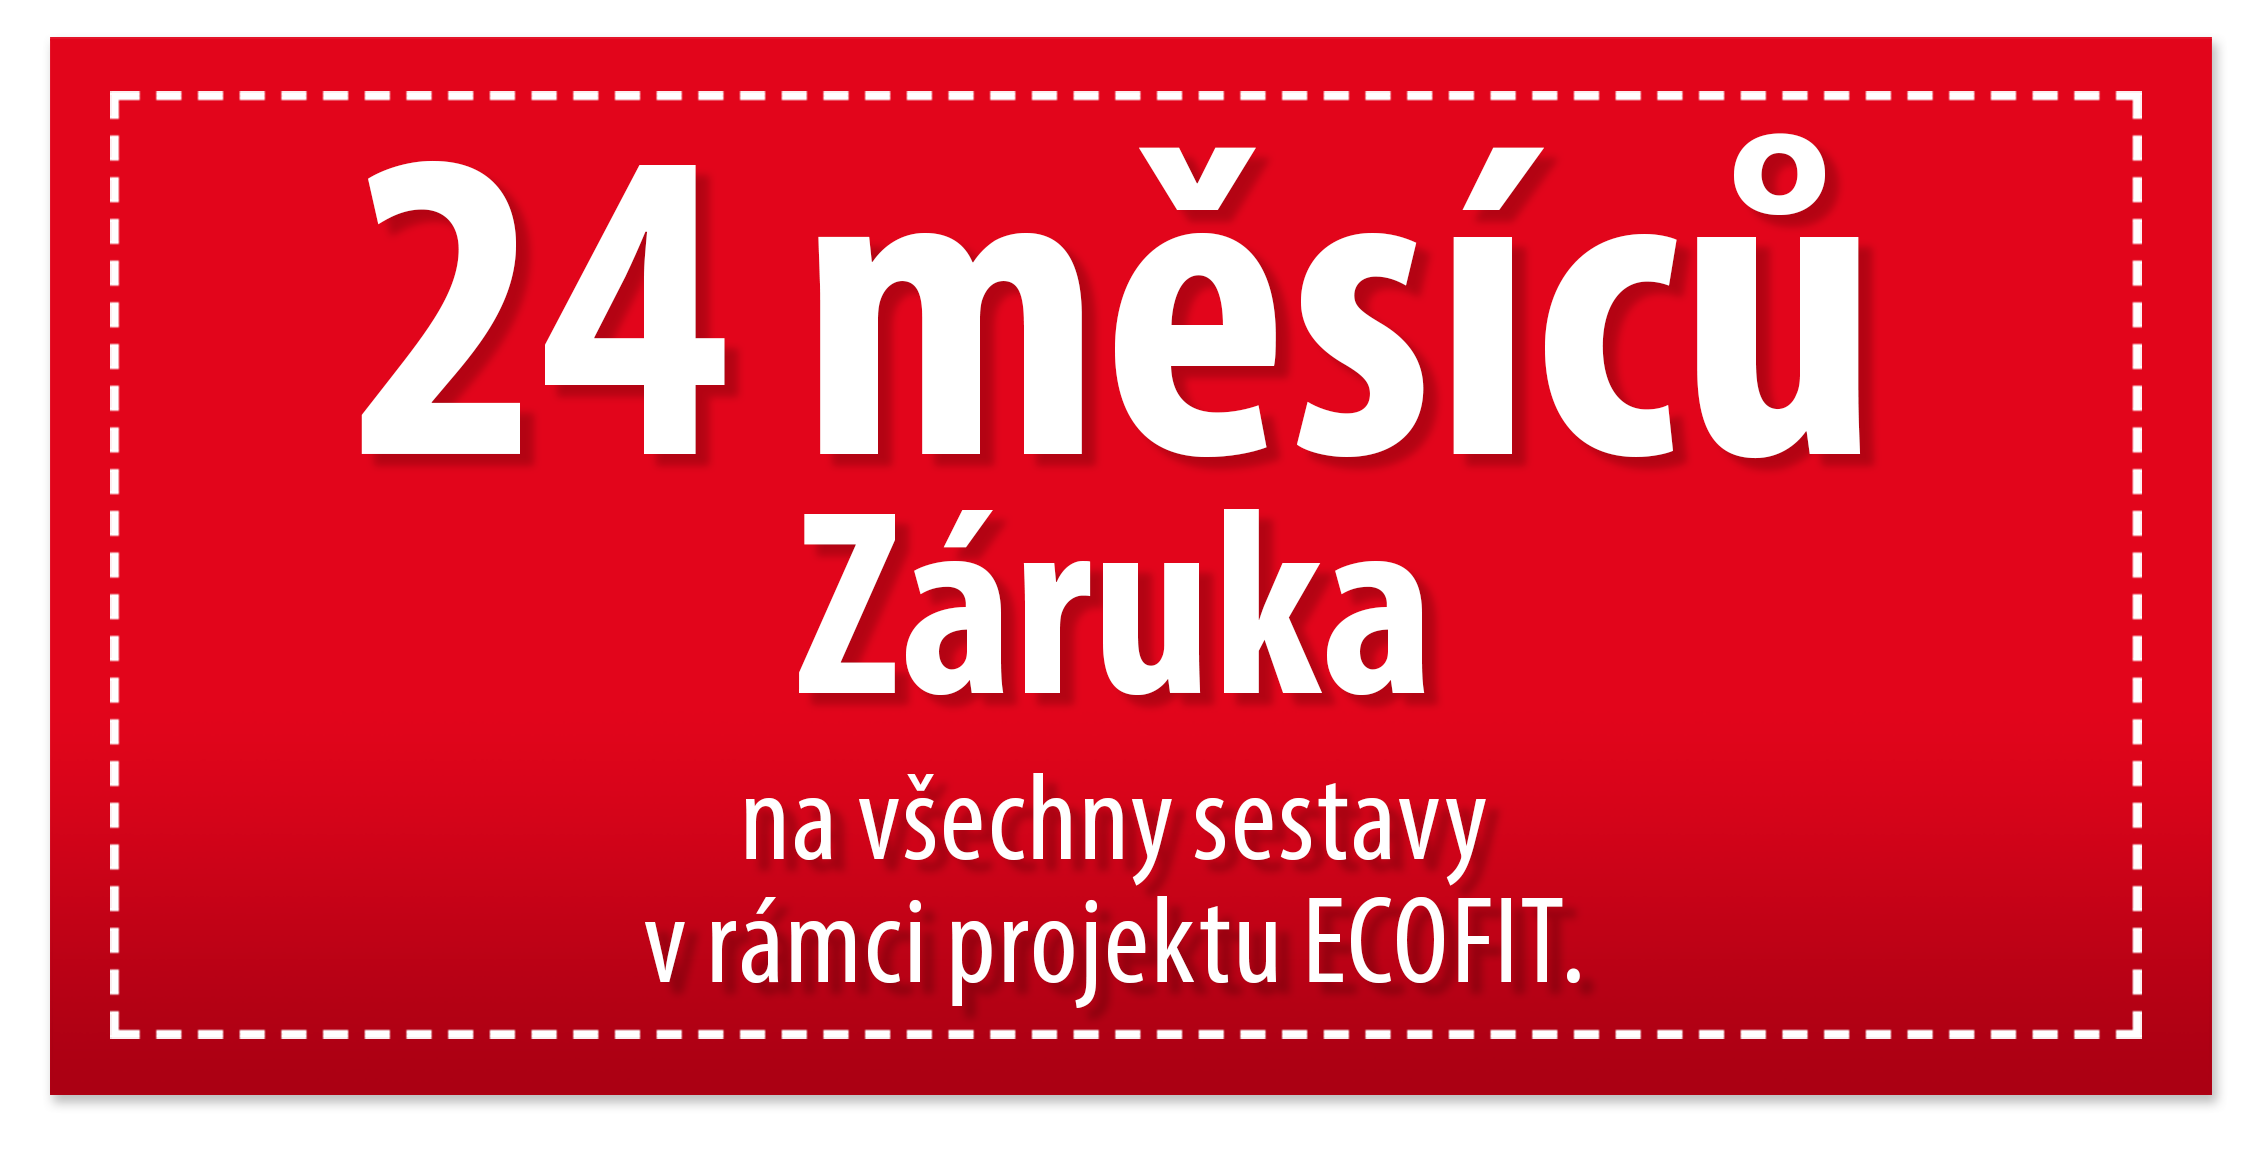 ECOFIT 24 měsíců záruka - BVS Industrie-Elektronik